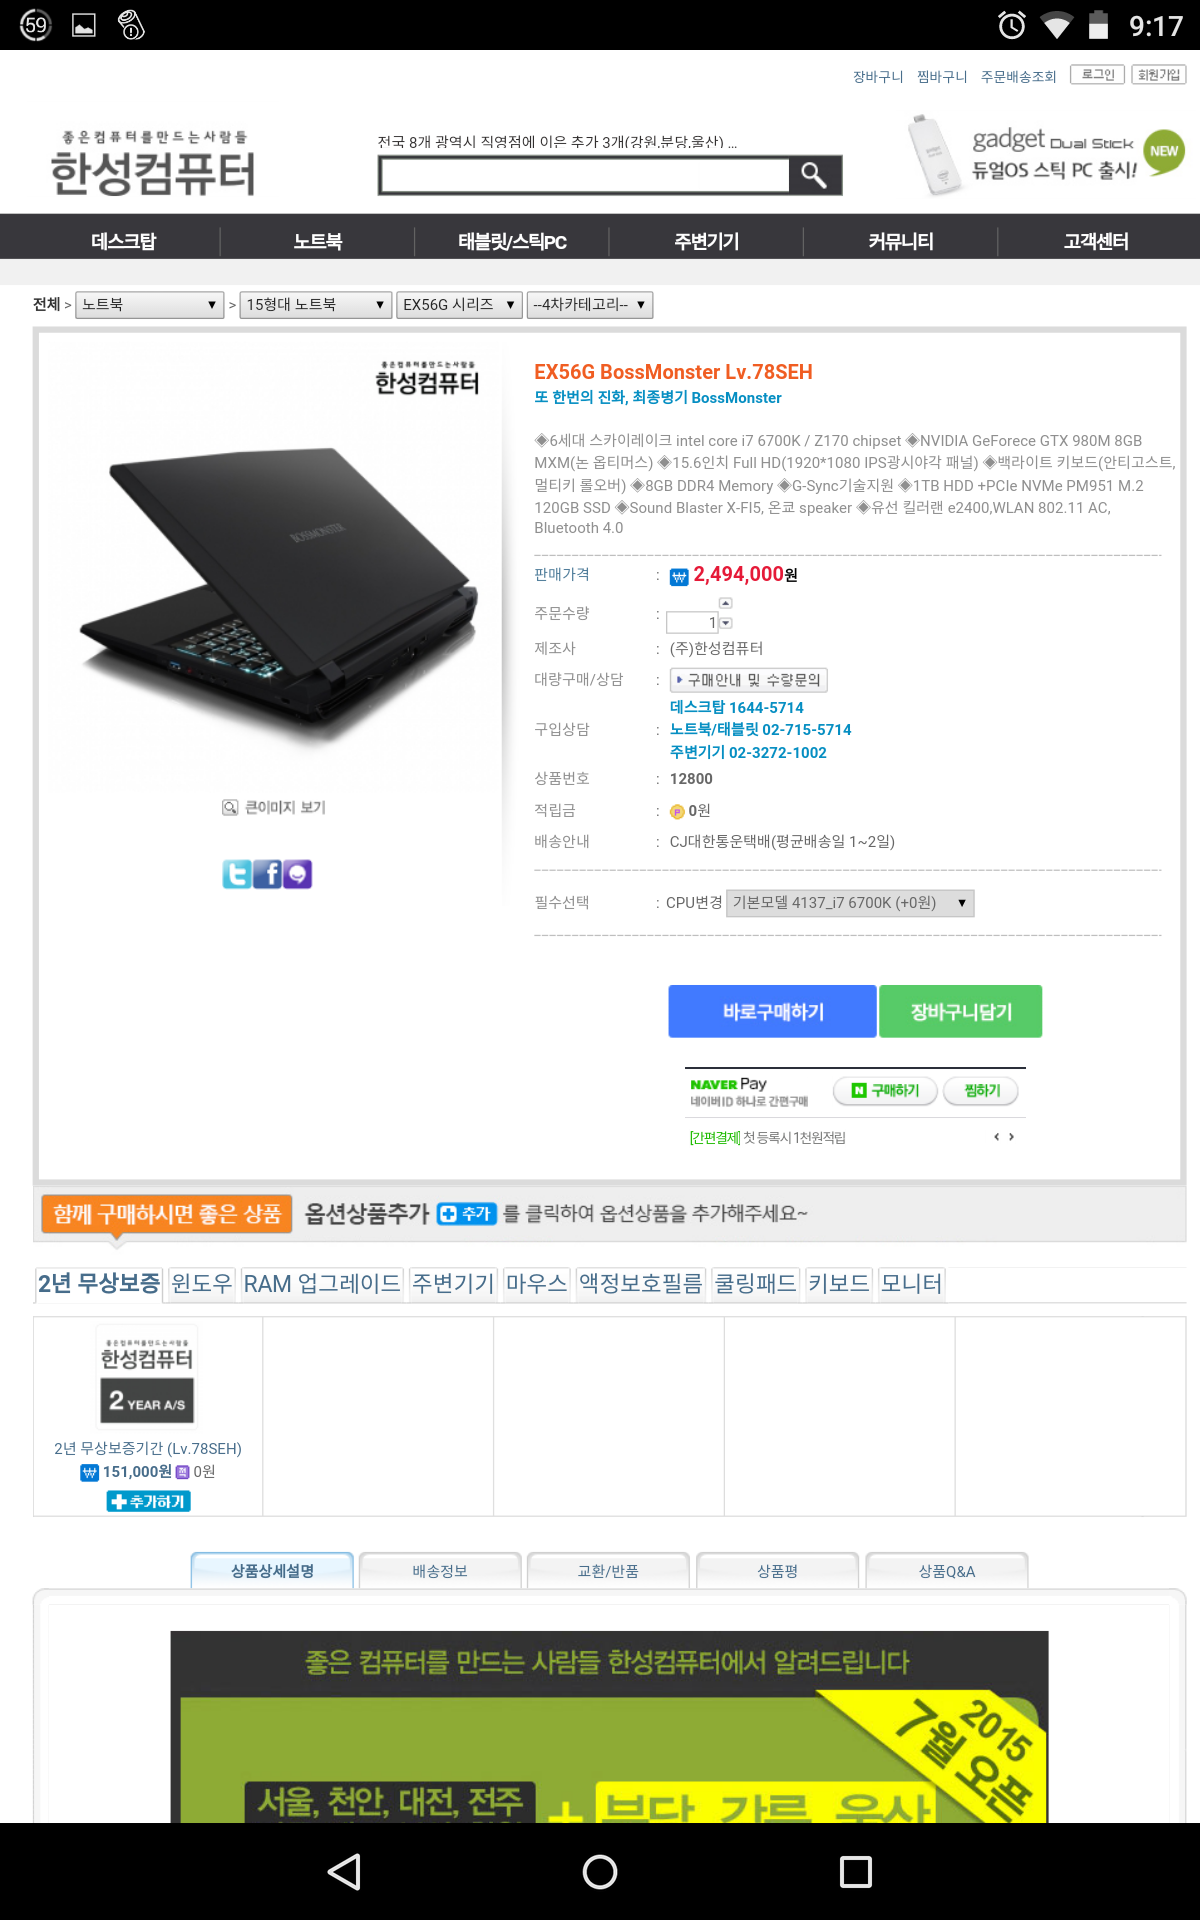 Screenshot_2015-10-12-21-17-42.png 스카이레이크 i7 6700K를 탑재한 한성컴퓨터 노트북, EX56G BossMonster Lv.78SEH